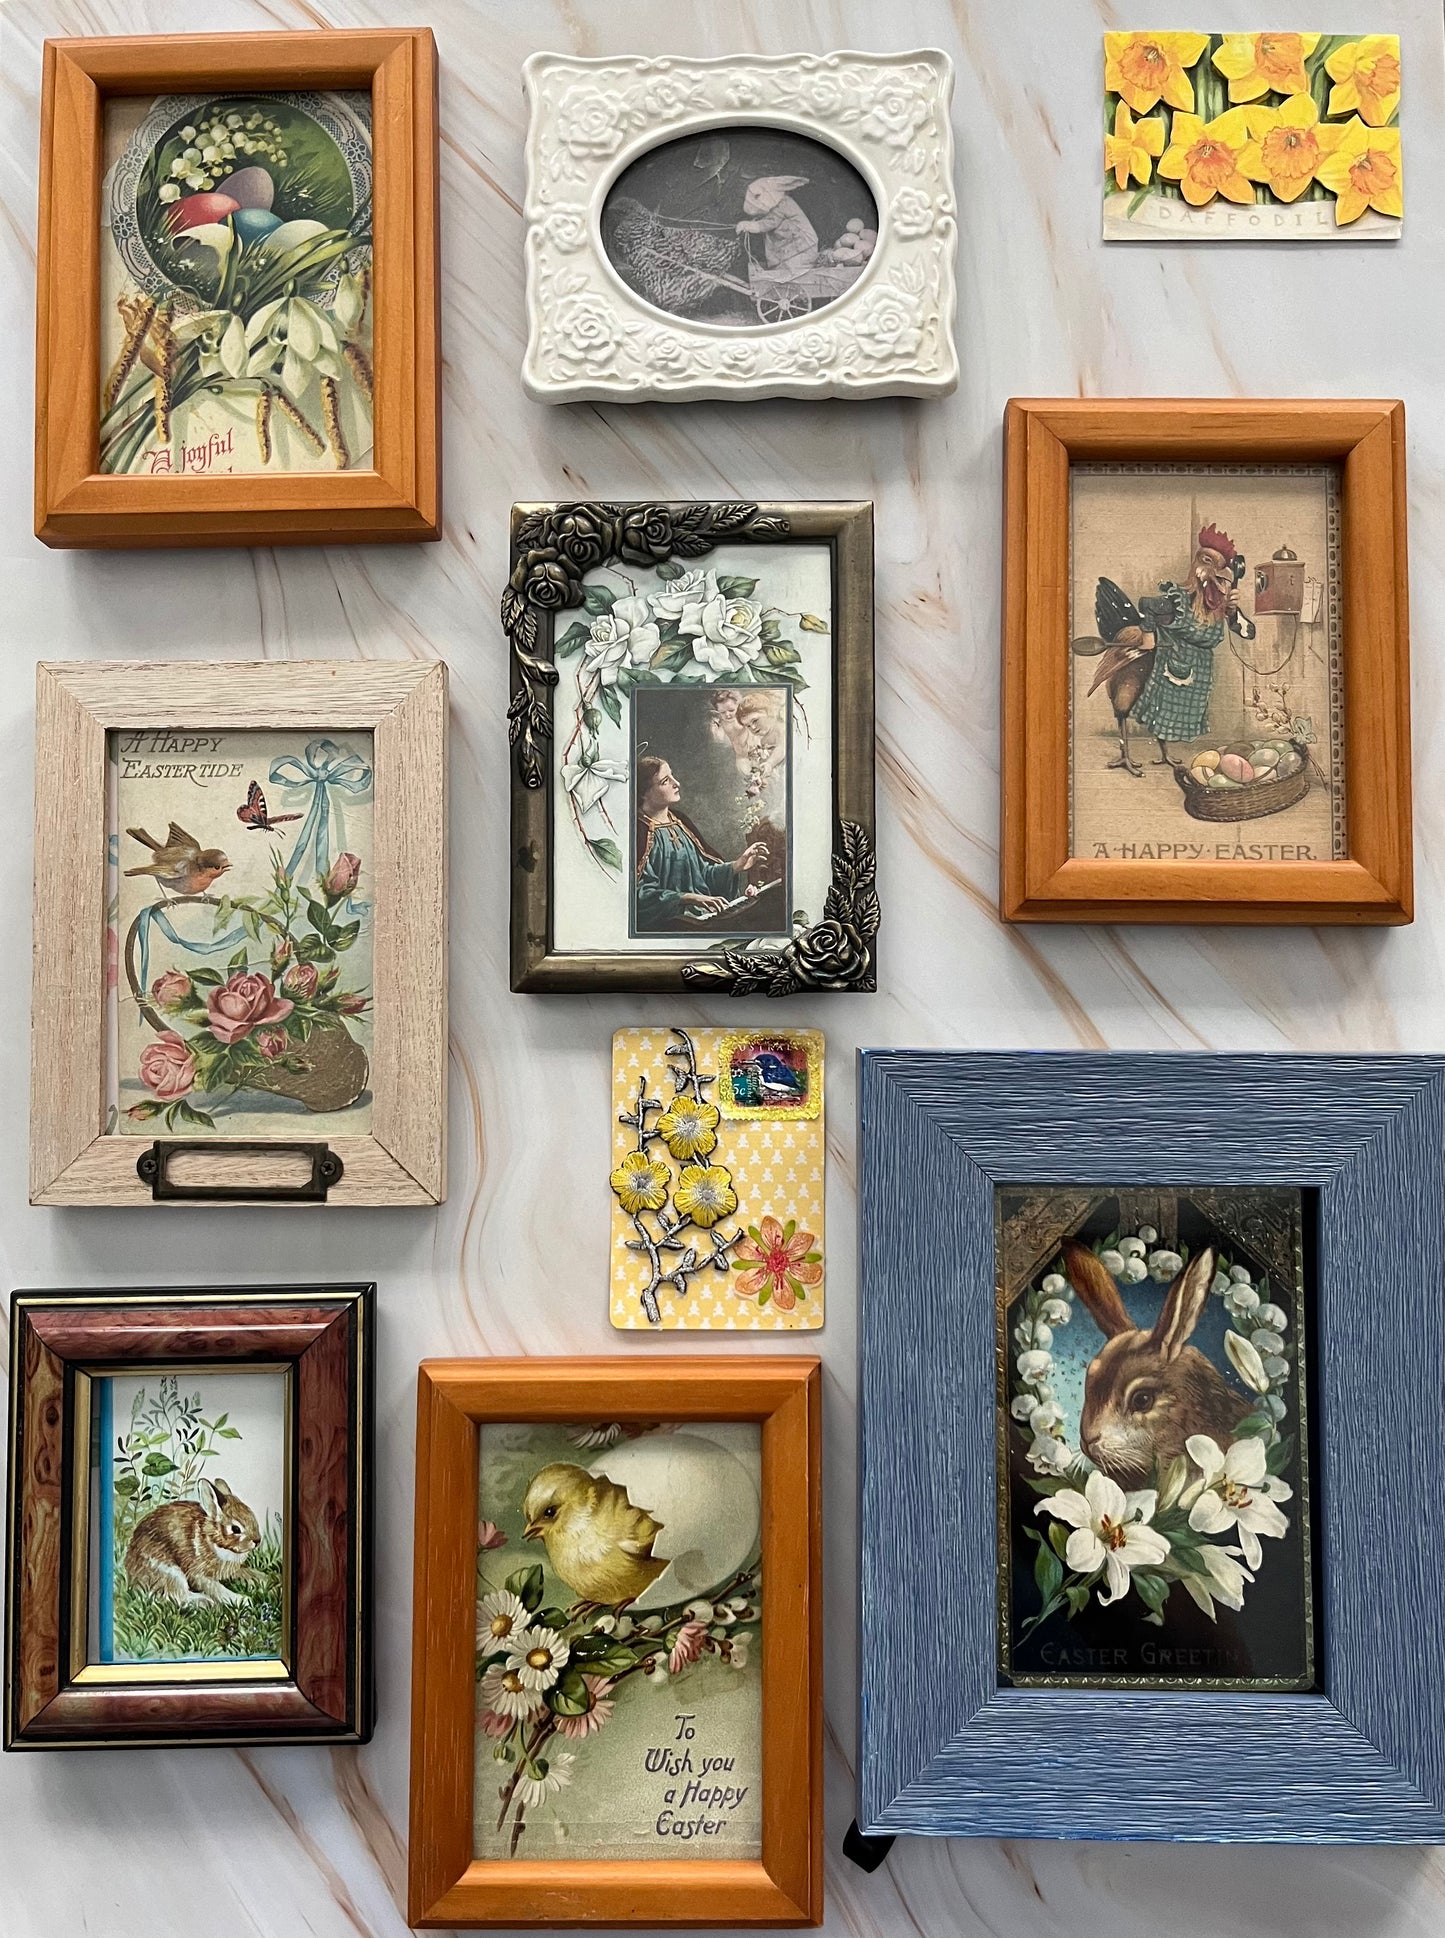 Vintage Style Ephemera Mixed Media Artist Trading Card - Bunny Rabbit in Ceramic Flower Frame”